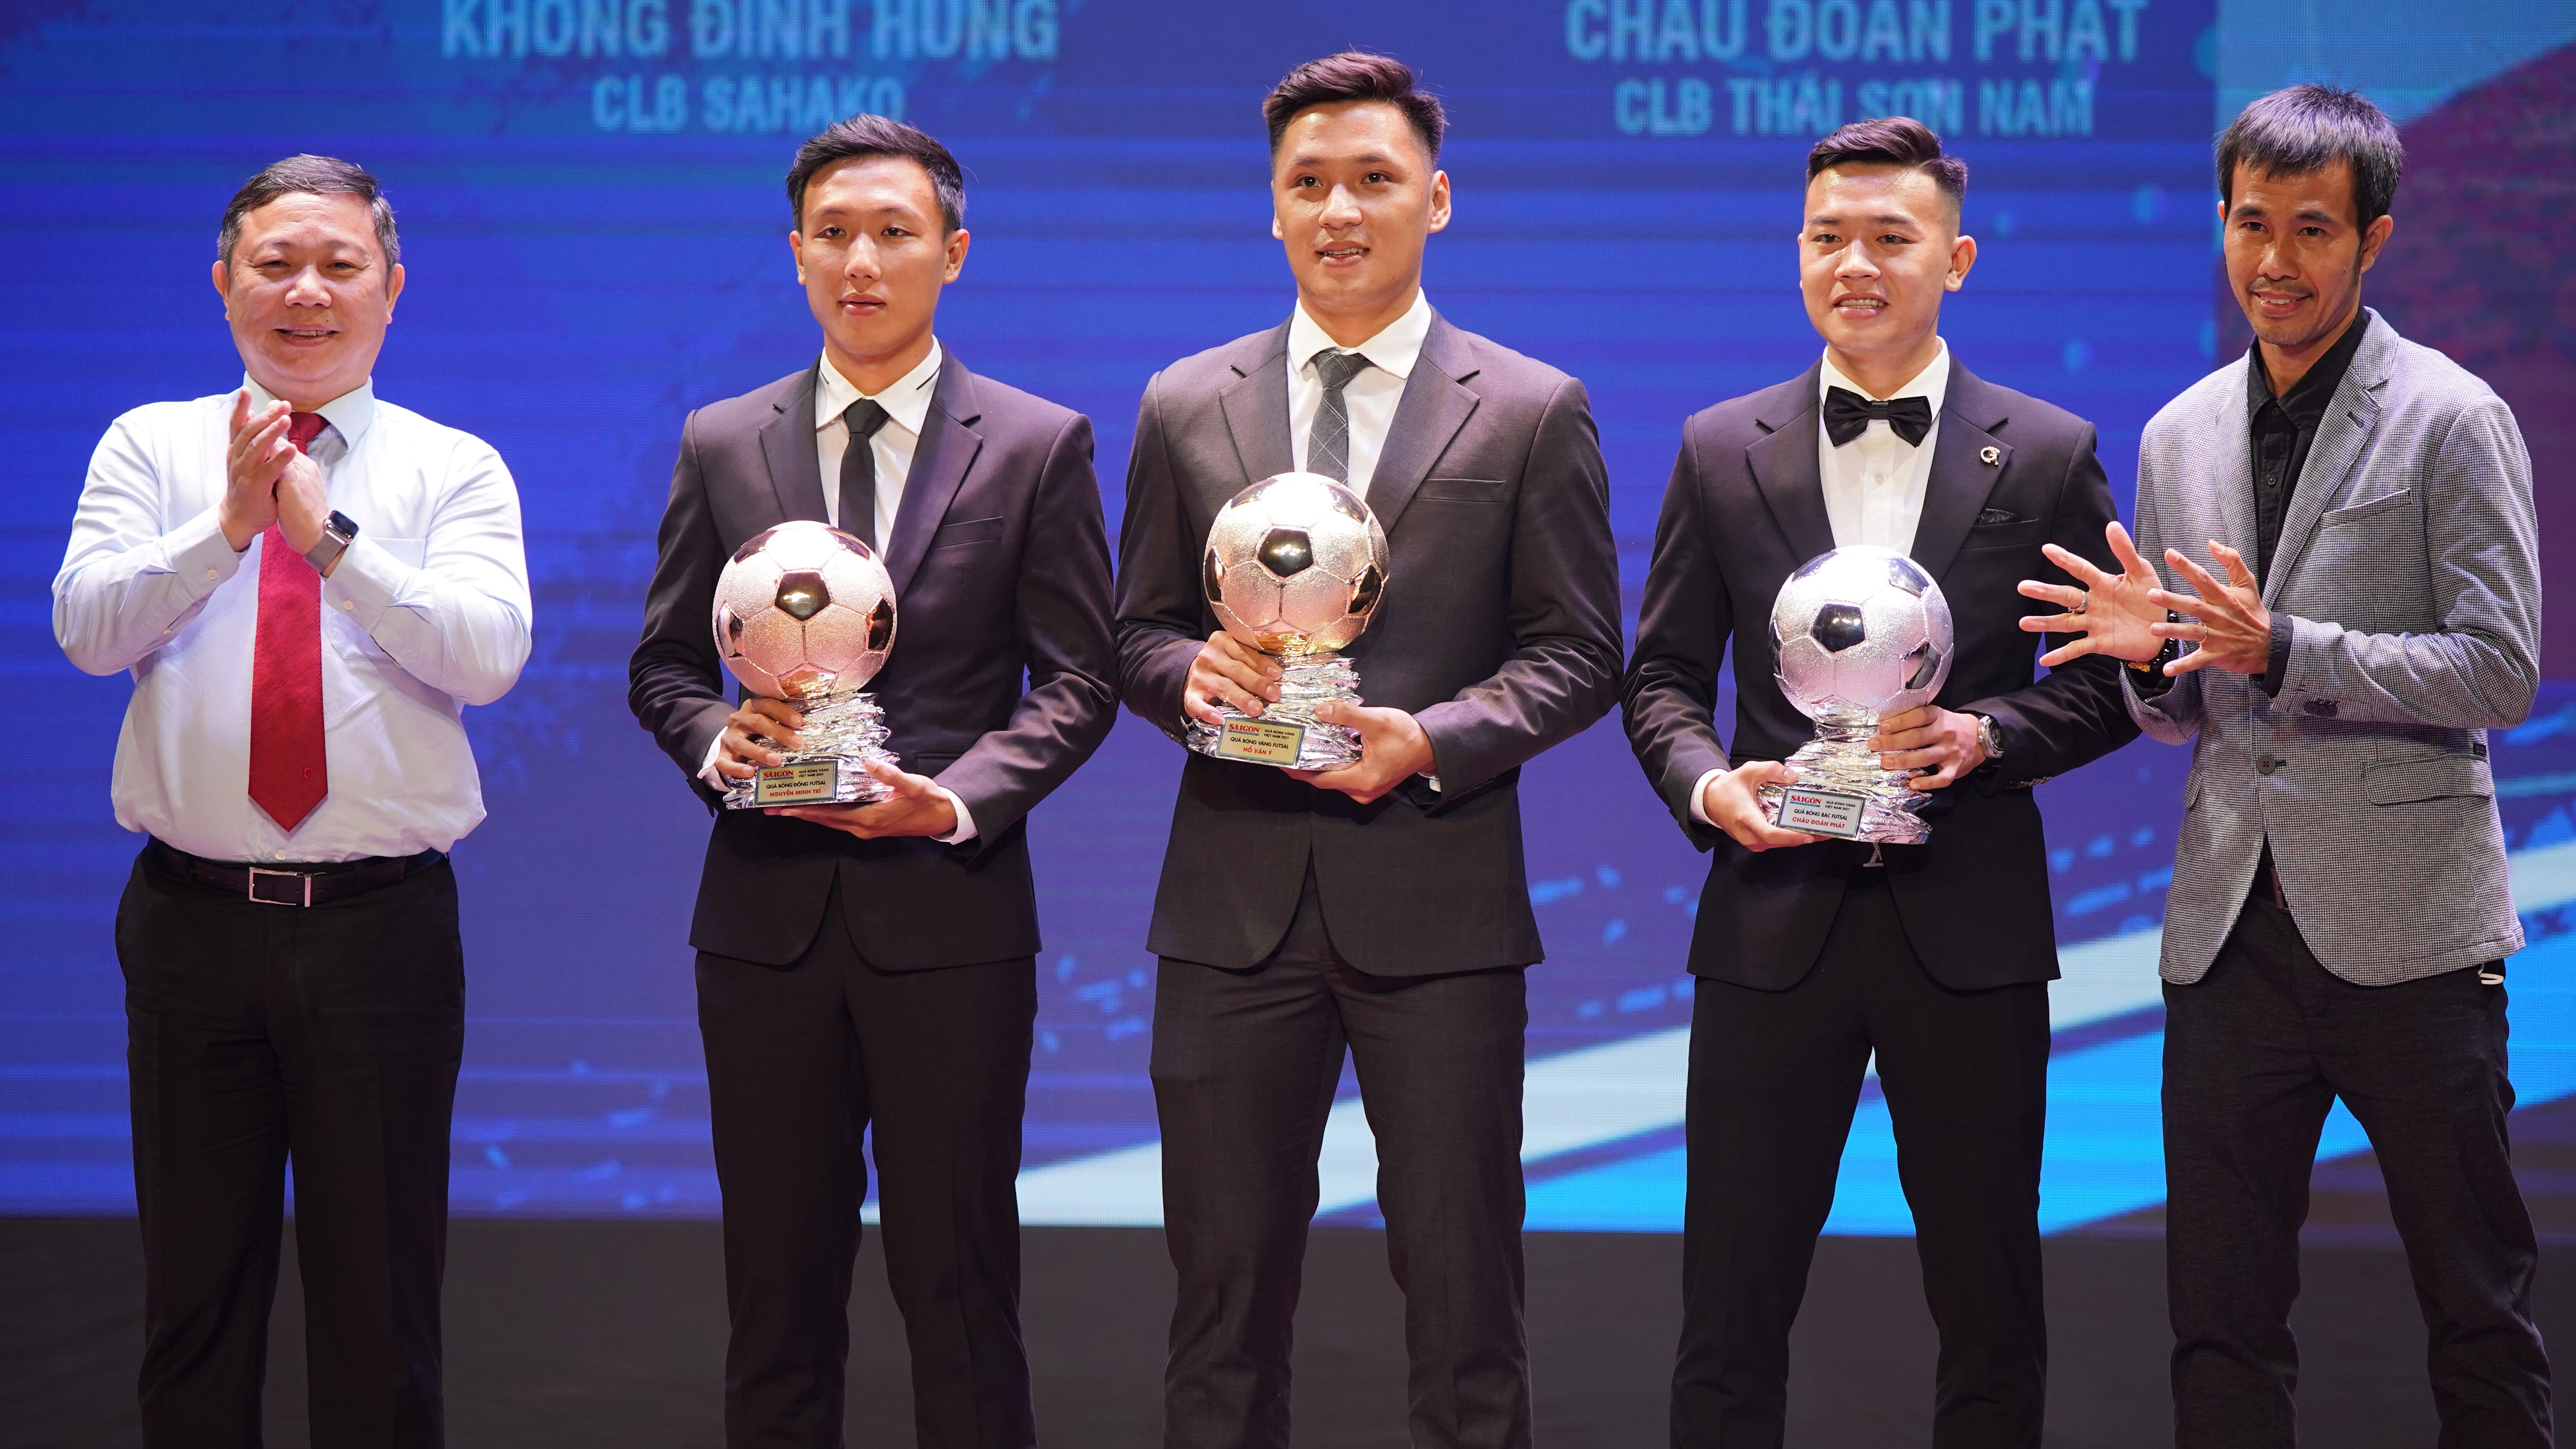 Ho Van Y Chau Doan Phat Nguyen Minh Tri Vietnam Futsal QBV 2021